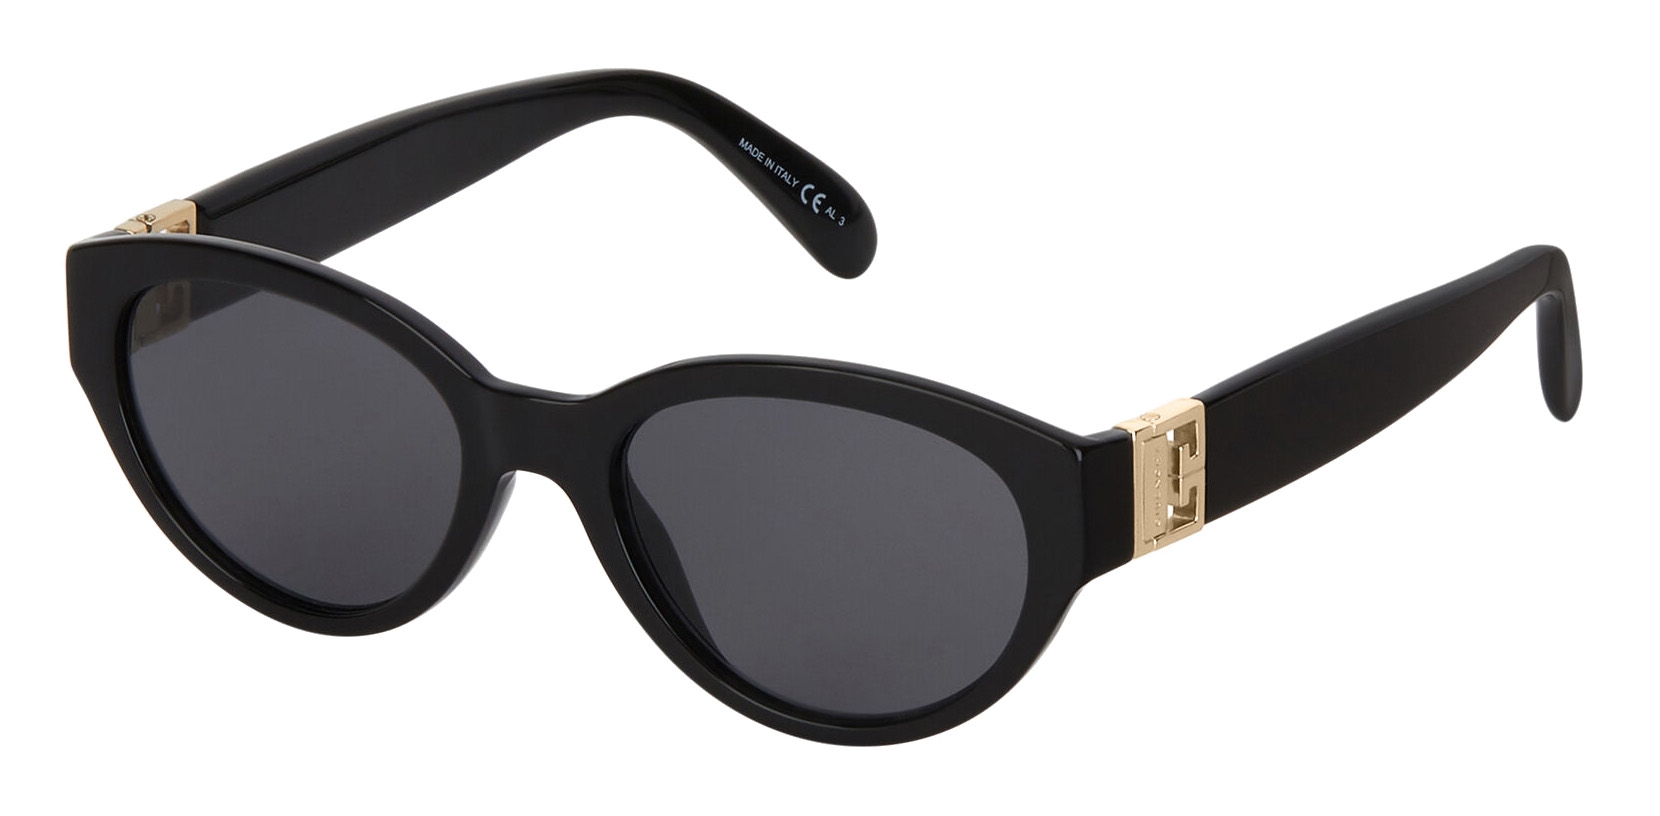 Givenchy - Sunglasses GV3 Round in Acetate - Black Grey - Sunglasses - Givenchy  Eyewear - Avvenice